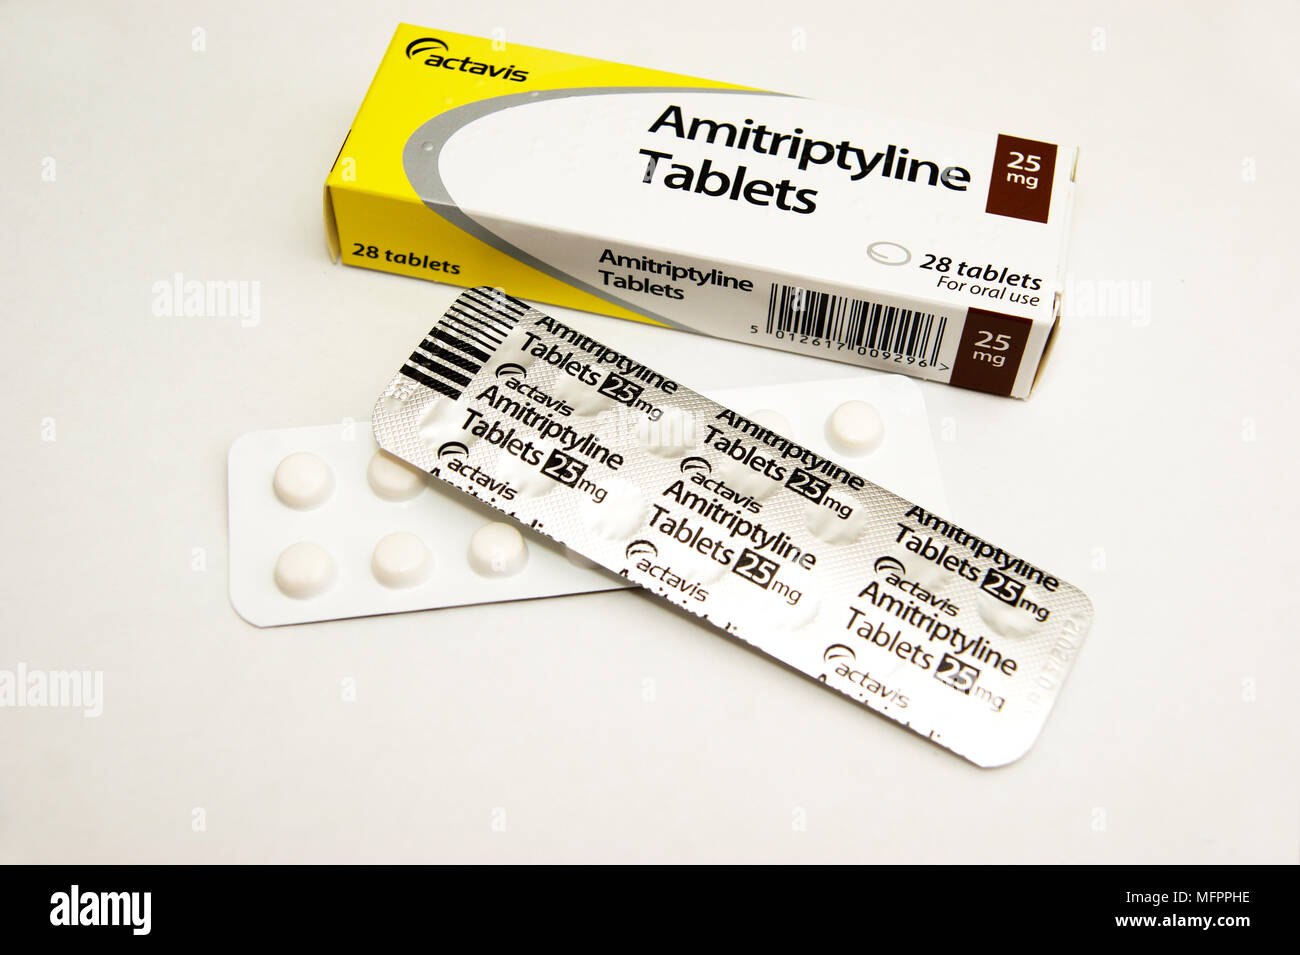 Amitriptyline tablets for depression & depressive disorders Stock Photo